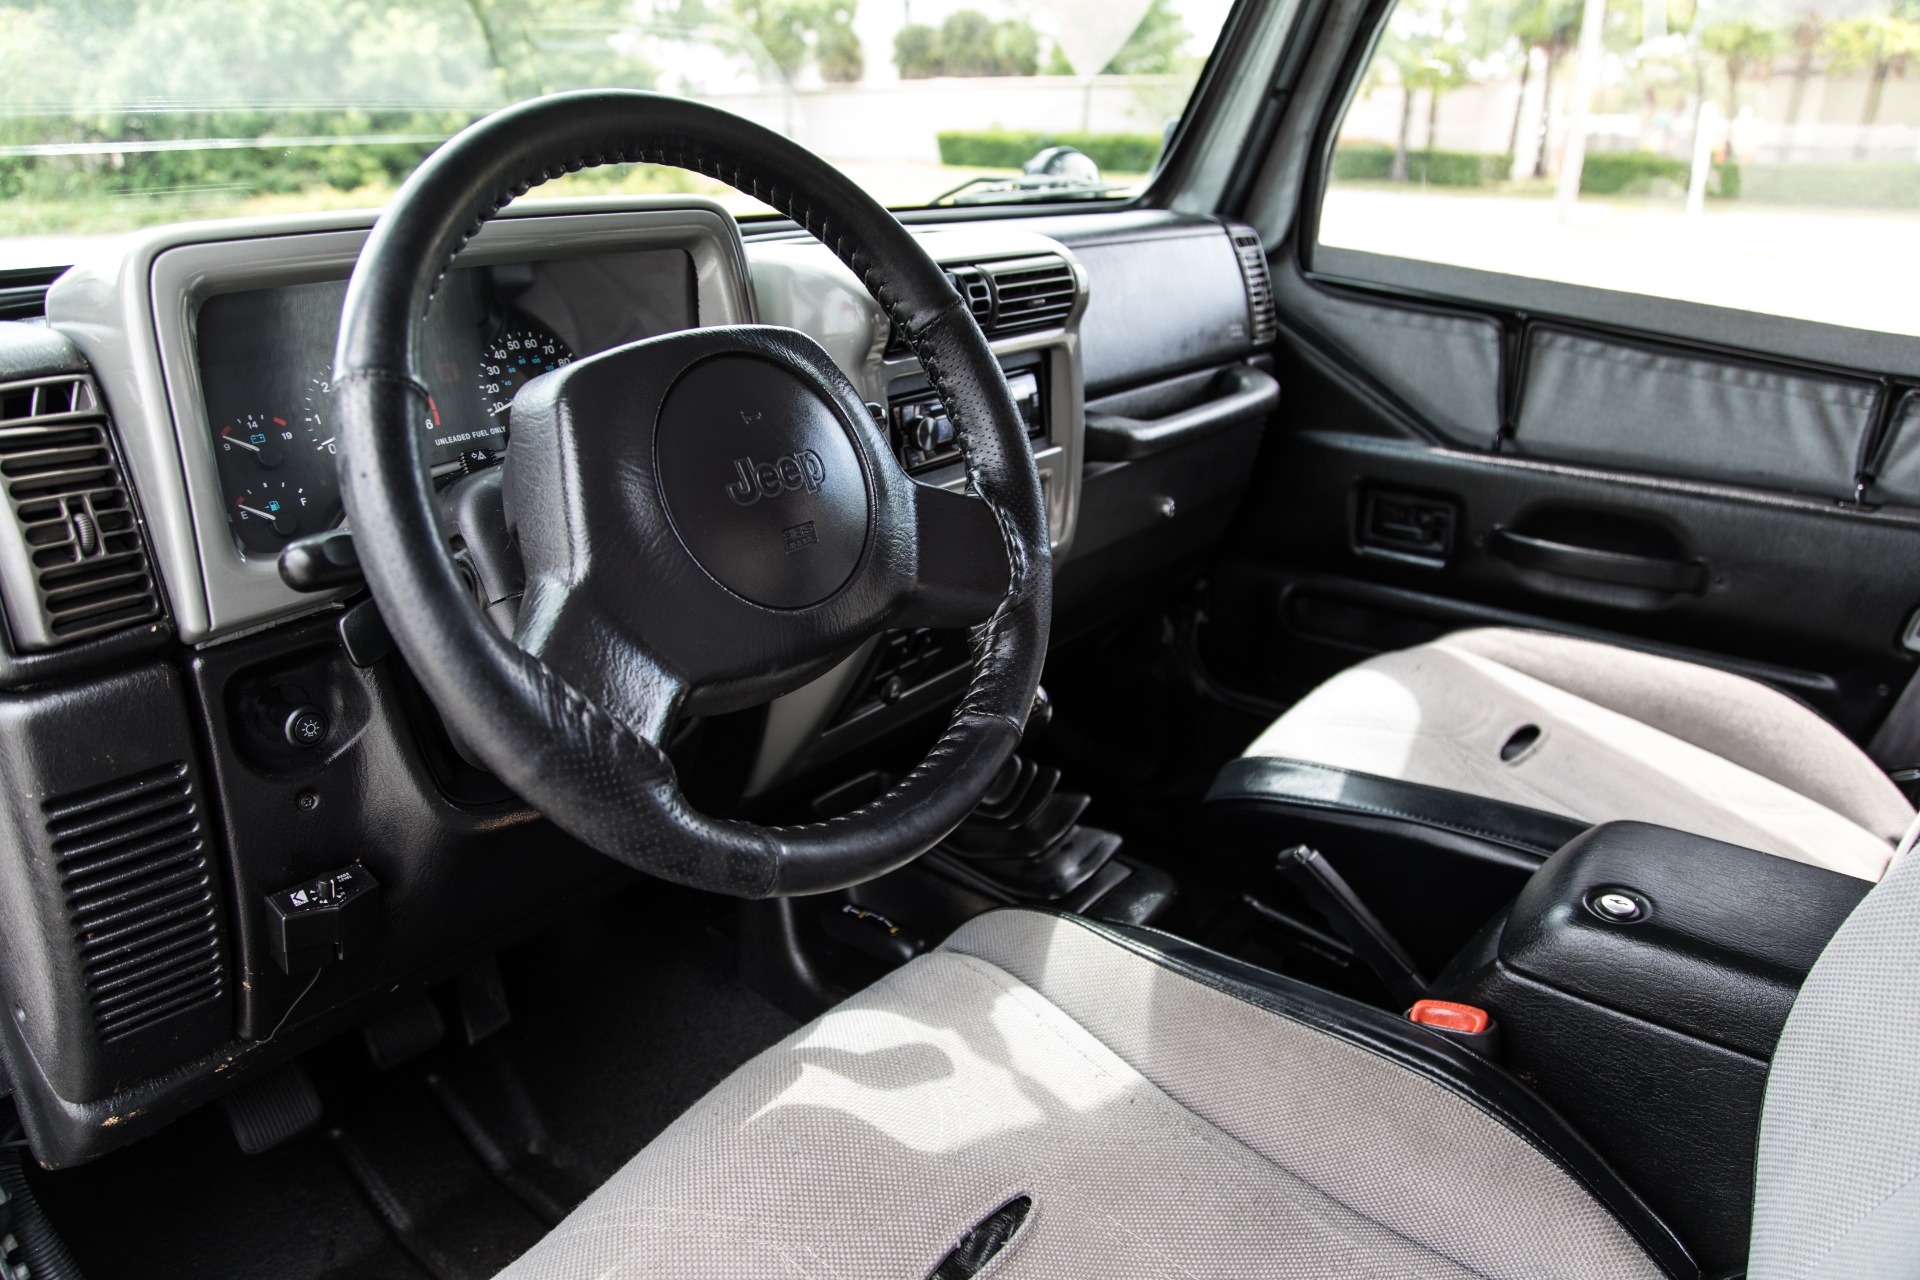 Used 1997 Jeep Wrangler SE For Sale ($14,900) | Marino Performance Motors  Stock #431333